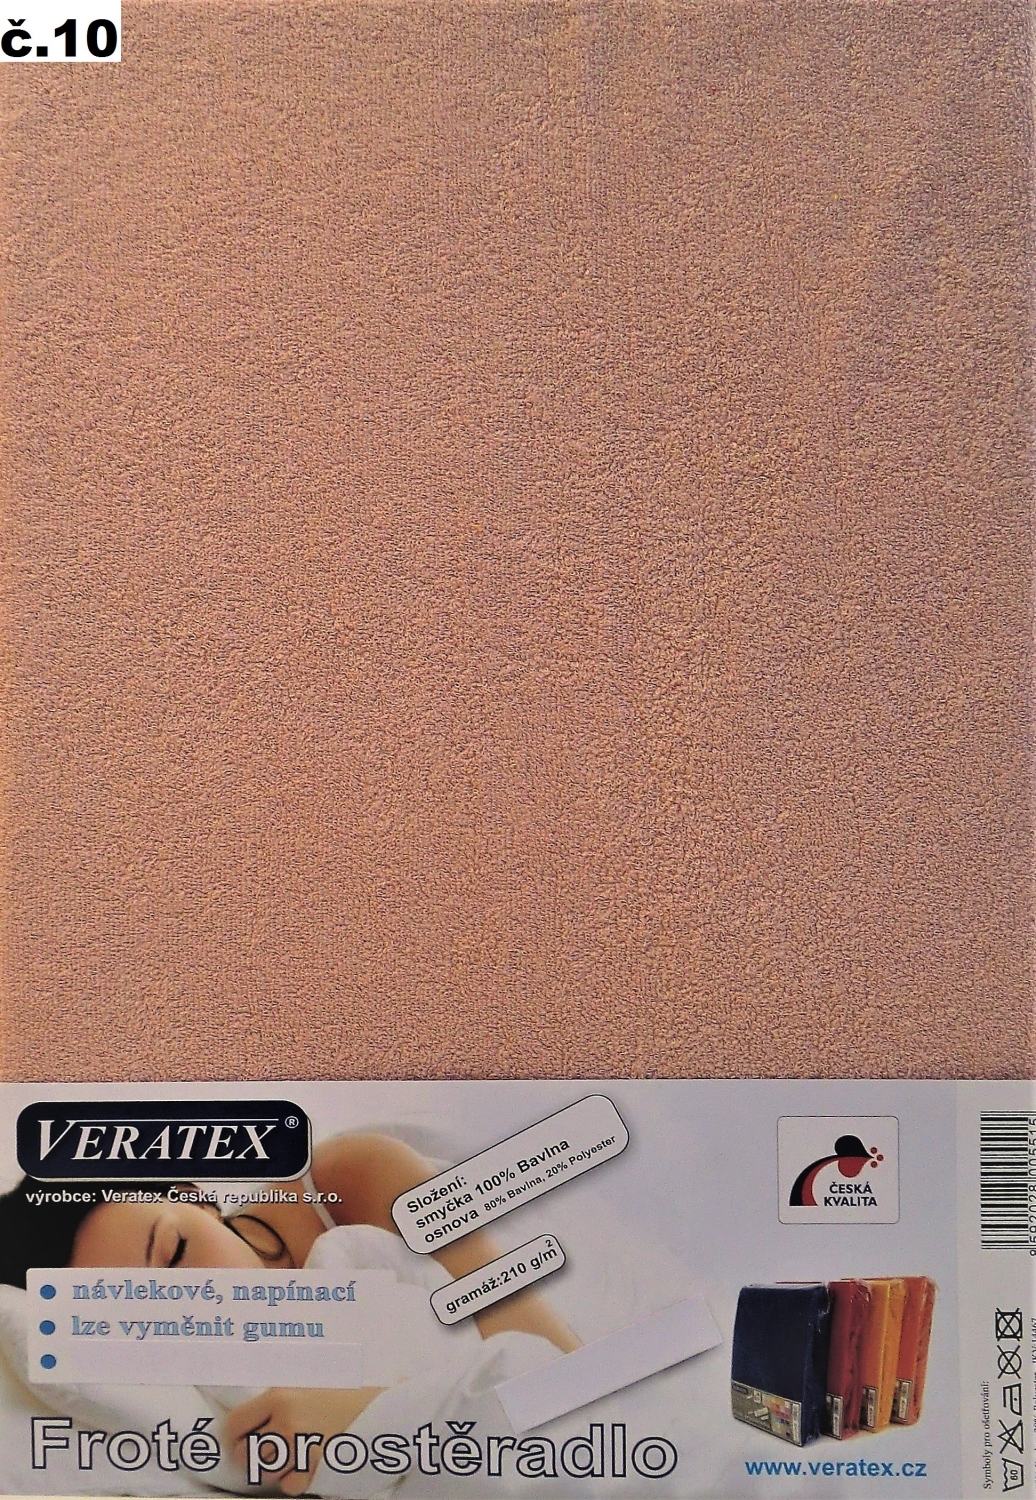 Veratex Froté prostěradlo 90x210/16 cm (č.10-starorůžová)